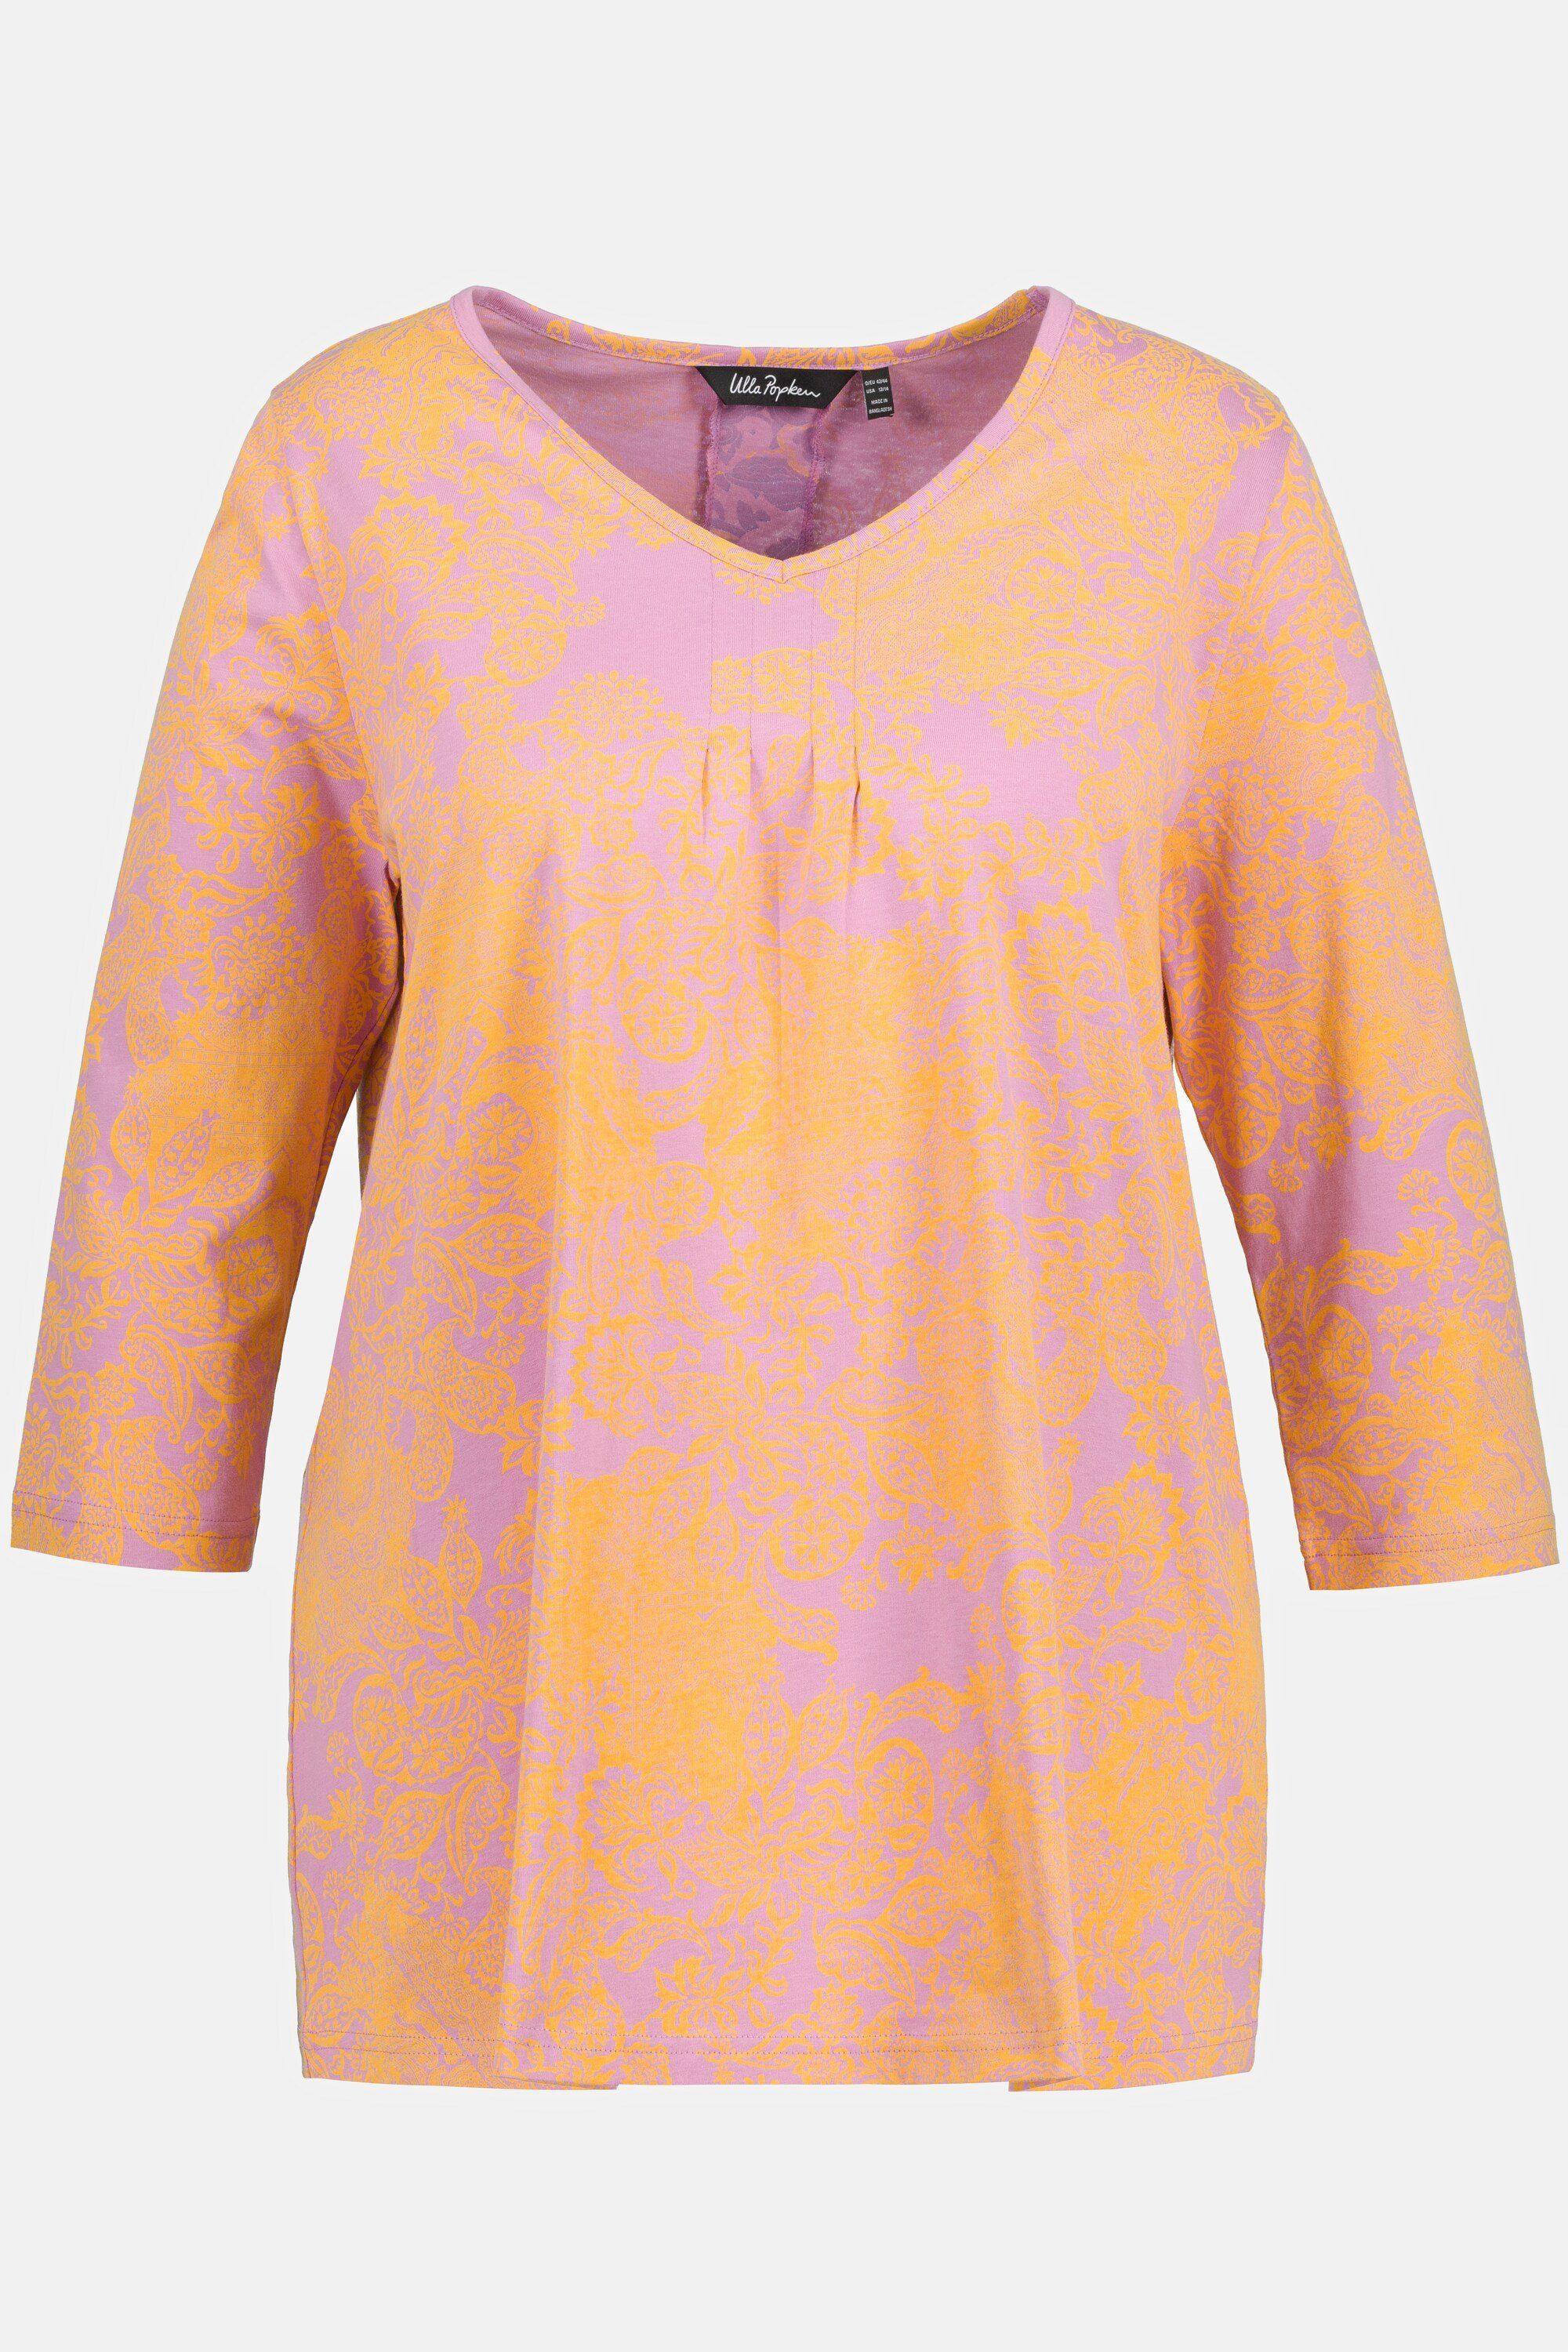 Zierfalten Rundhalsshirt Popken 3/4-Arm helles A-Linie Ulla pink Shirt V-Ausschnitt